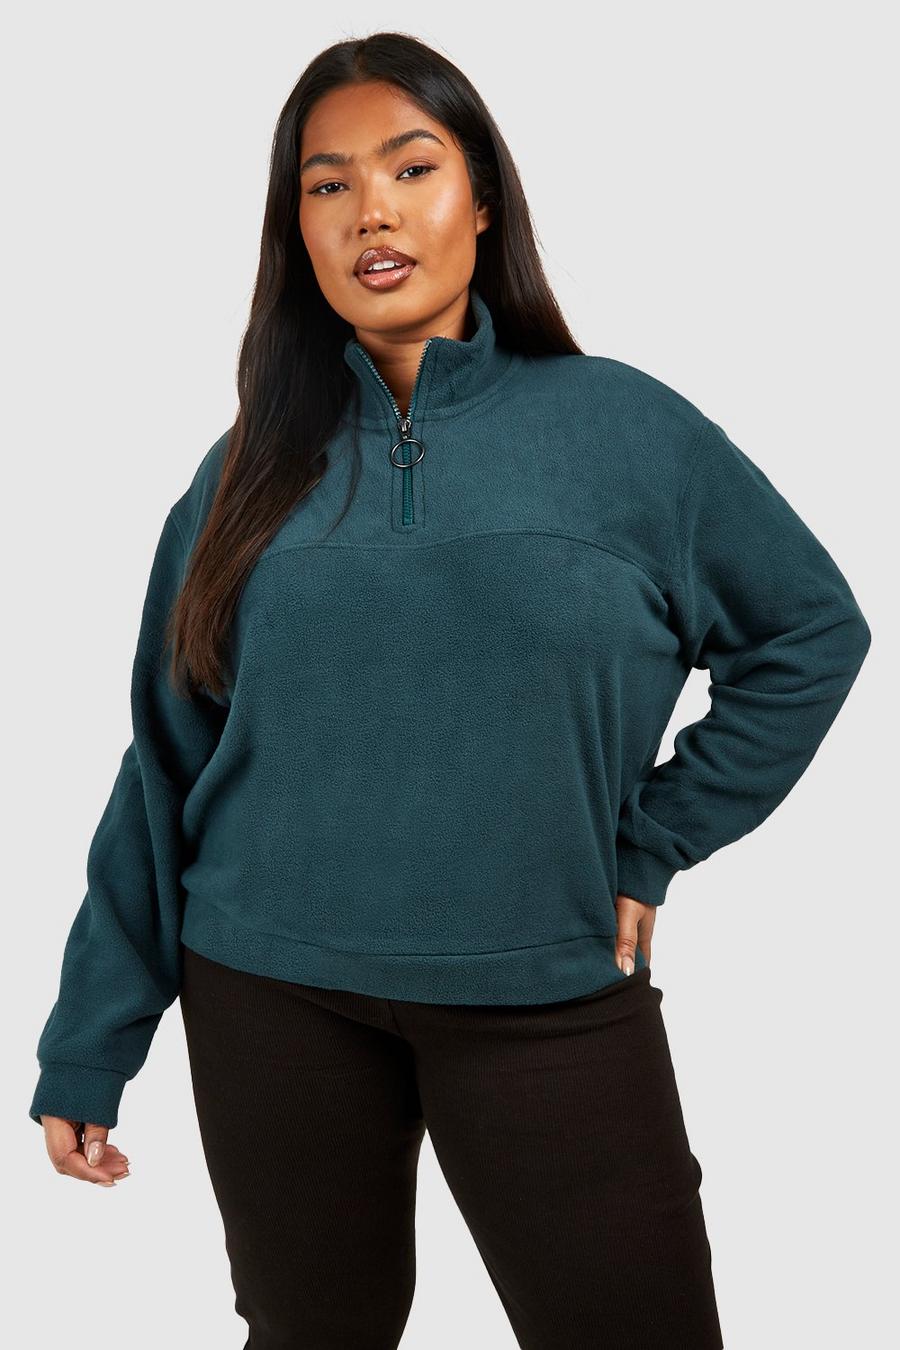 Sweatshirts for Women Size XL, Jumpers